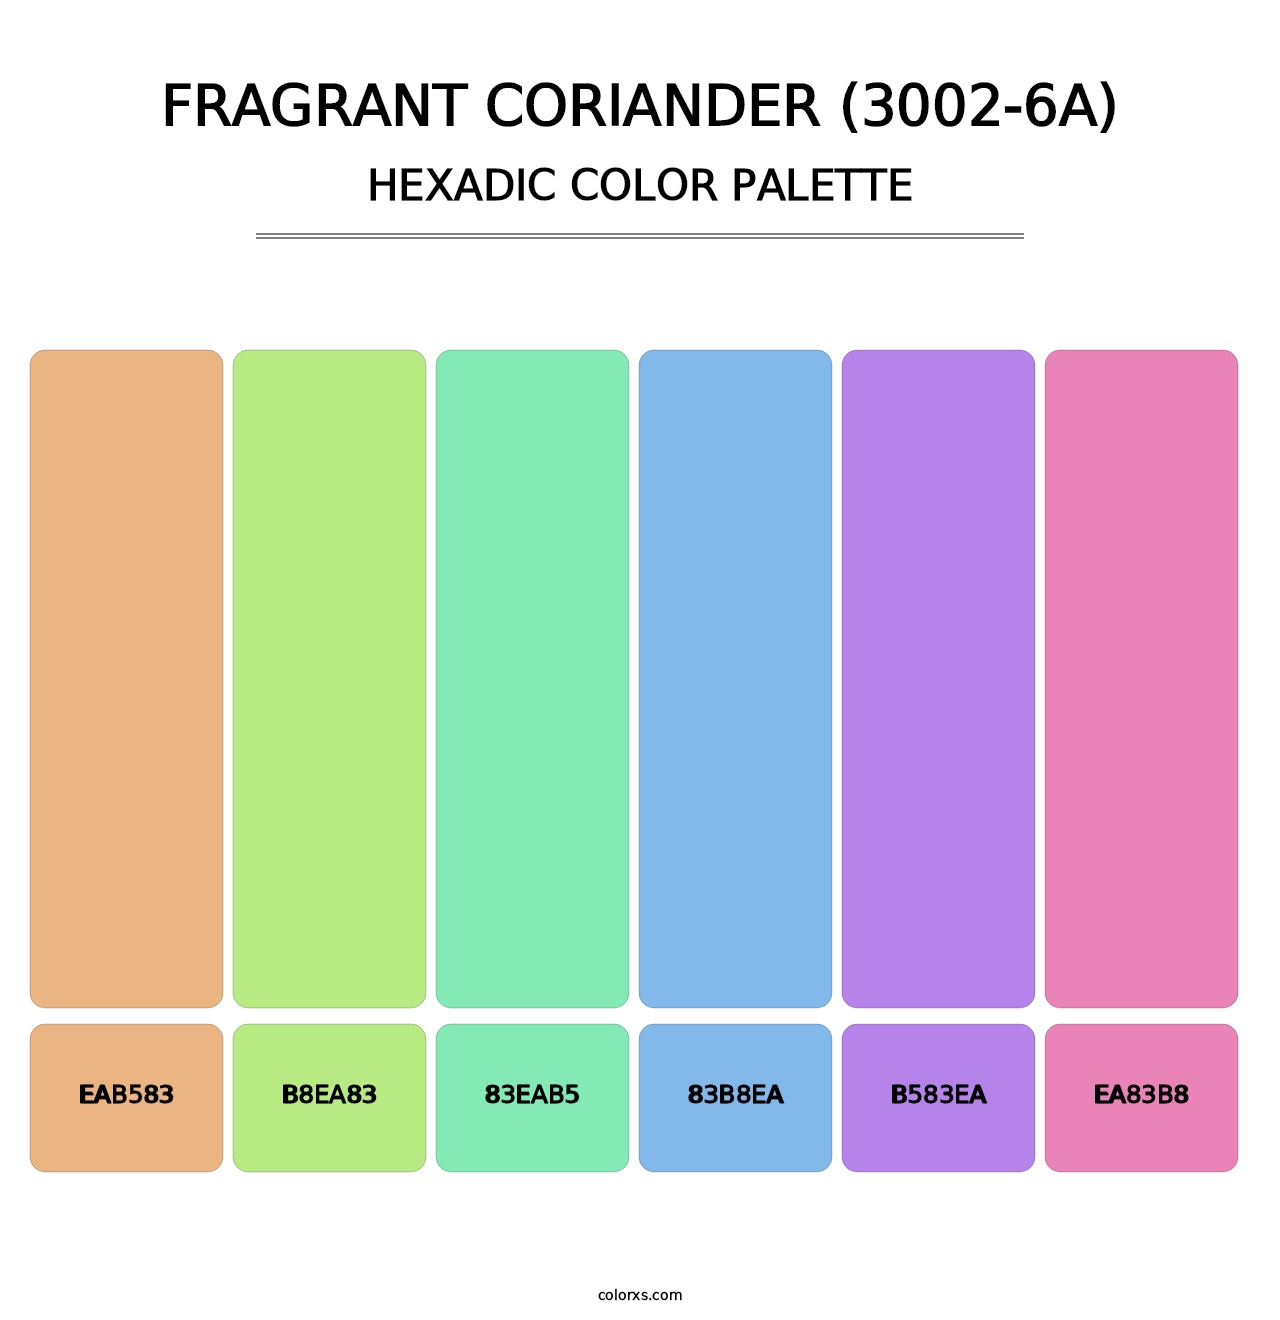 Fragrant Coriander (3002-6A) - Hexadic Color Palette